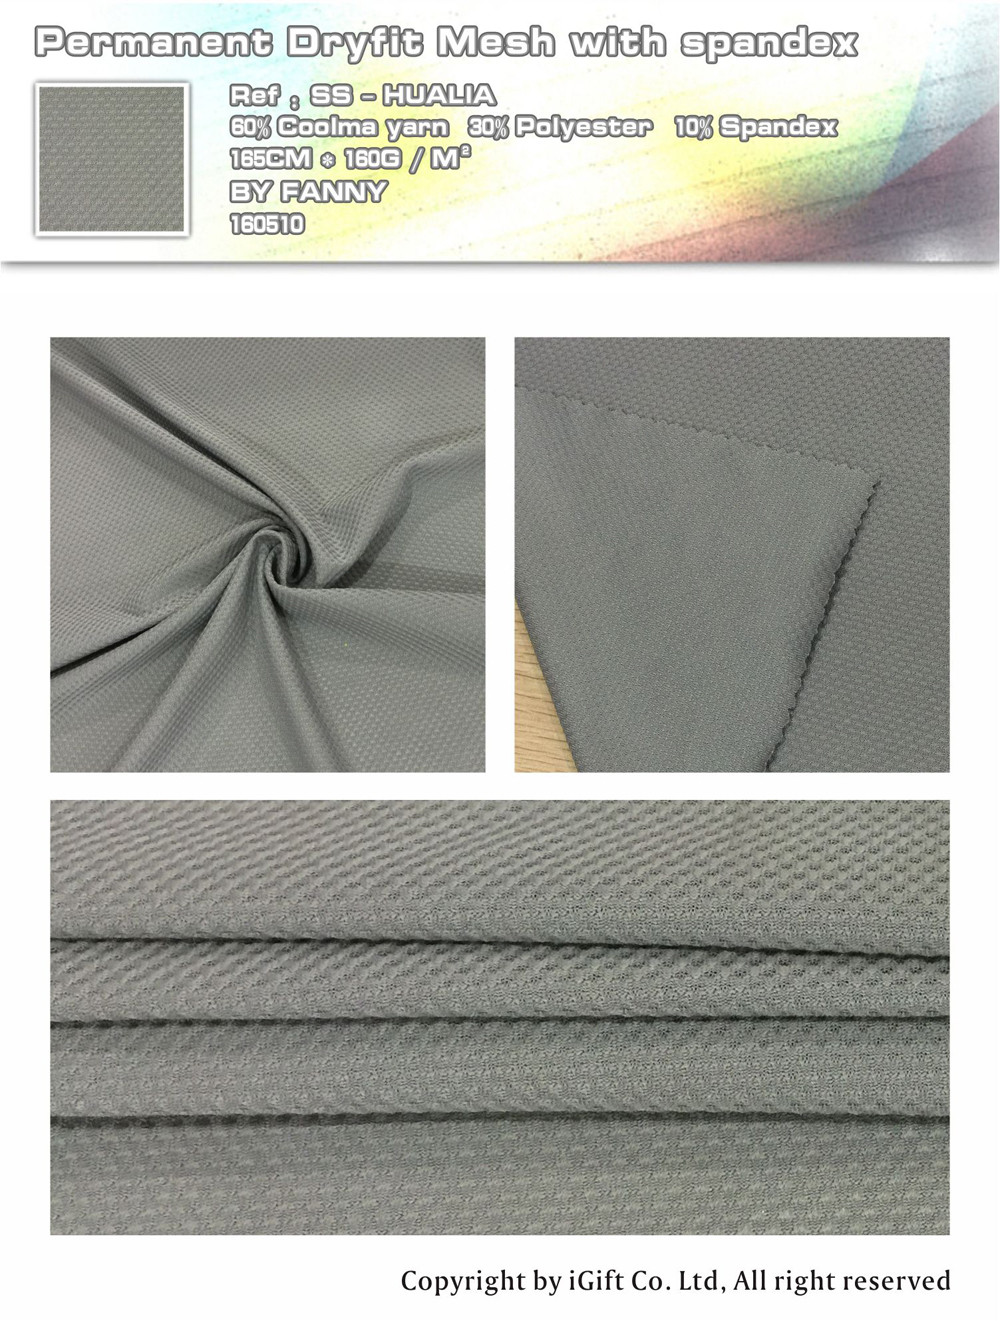 Permanent Dryfit Mesh with spandex        Ref:SS-HUALIA    60％ Coolma yarn   30％Polyester 10％Spandex     165CM*160G/M²   BY  FANNY   160510